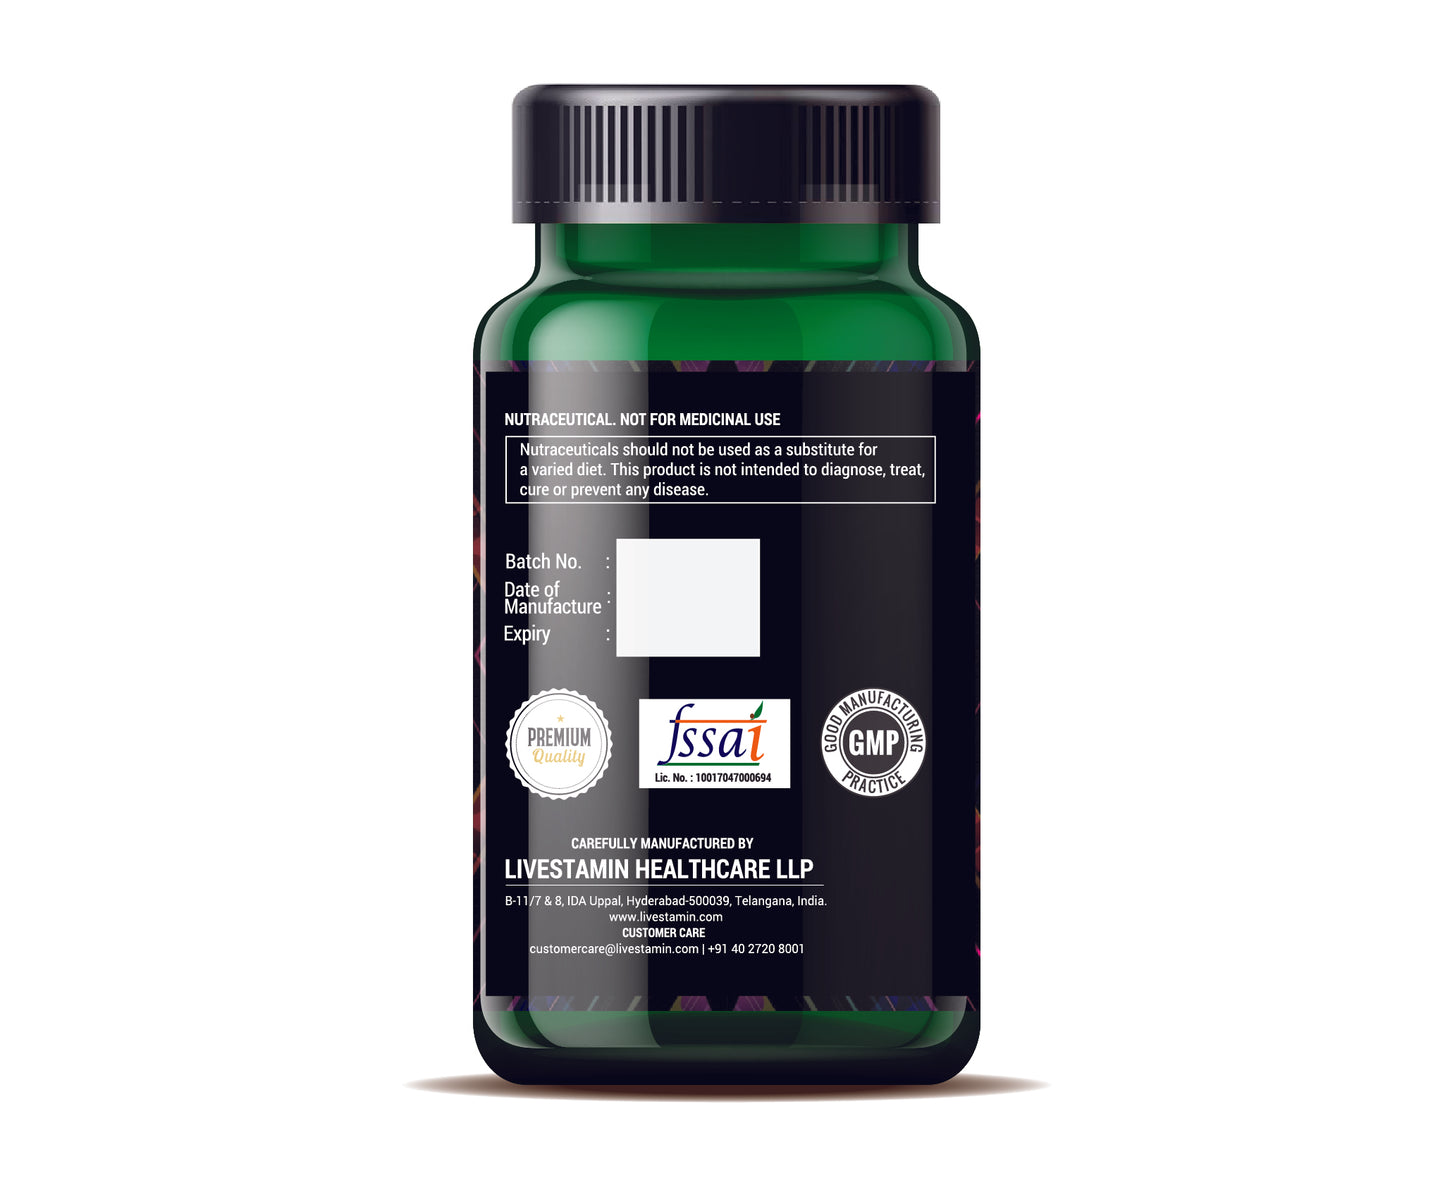 Tocotrienol + Wheat Germ Oil 60 Capsules